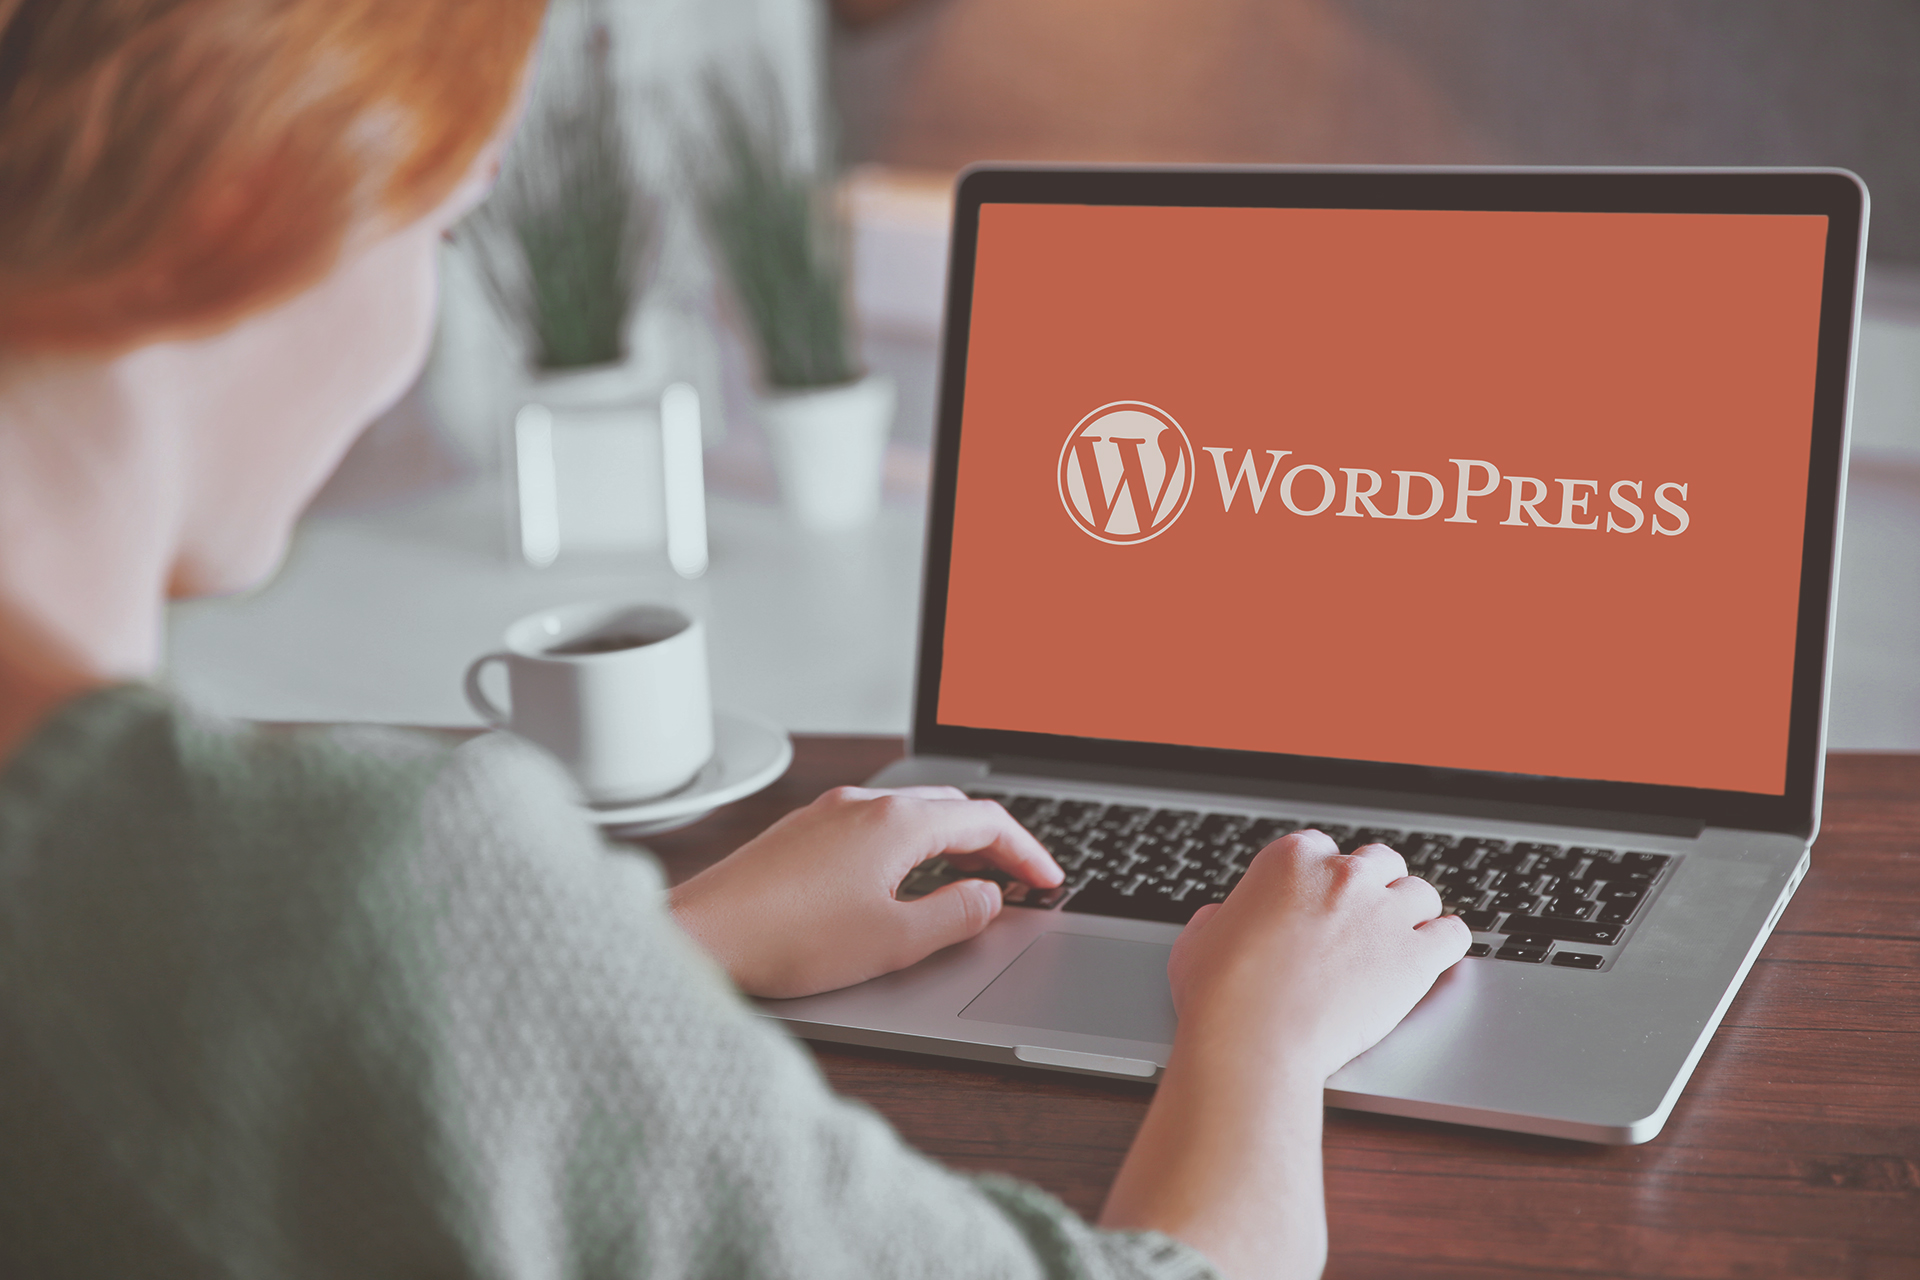 Wordpress быстро